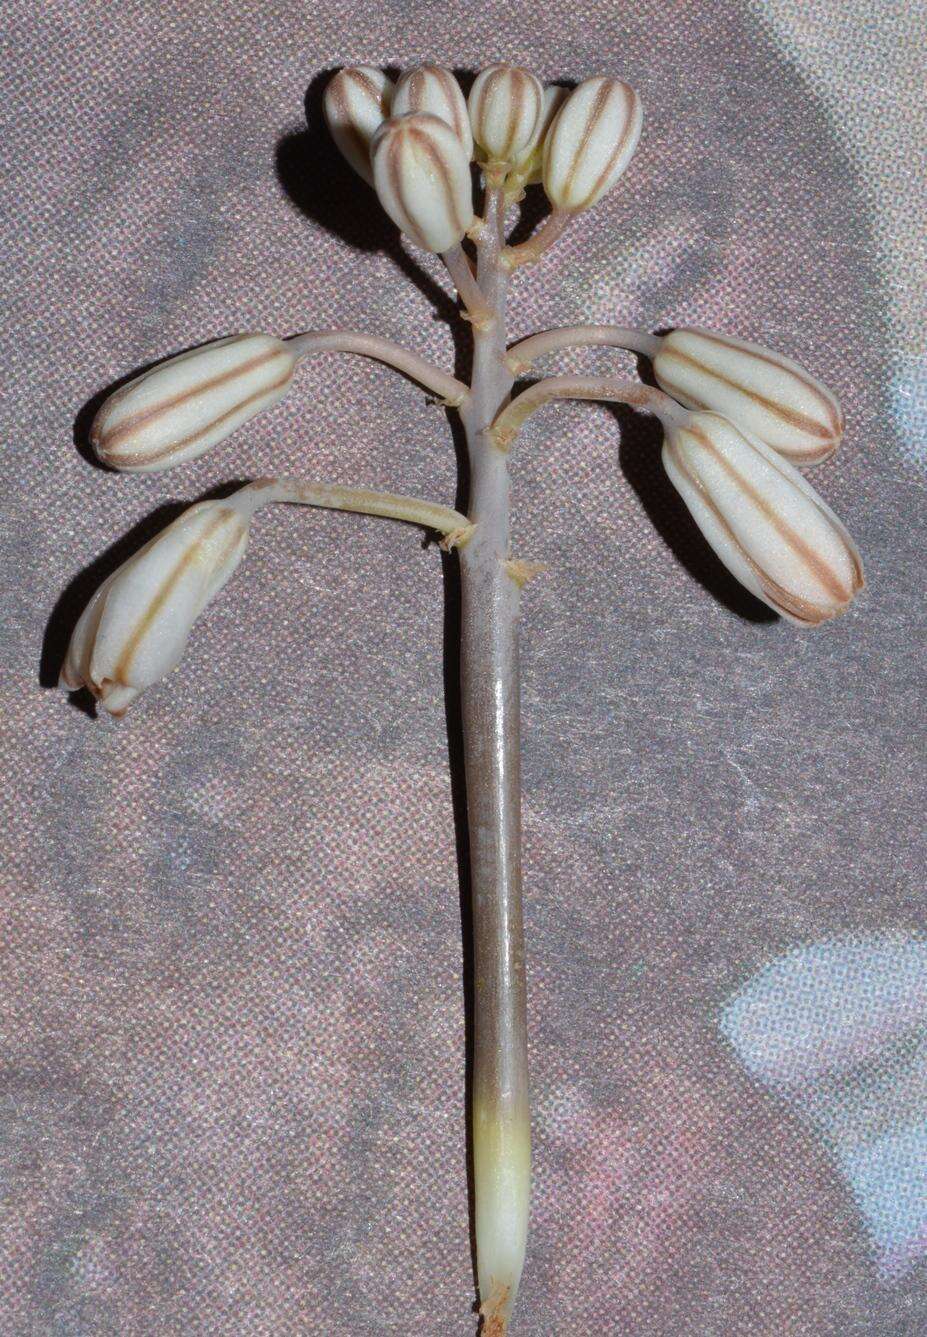 Image of Drimia khubusensis